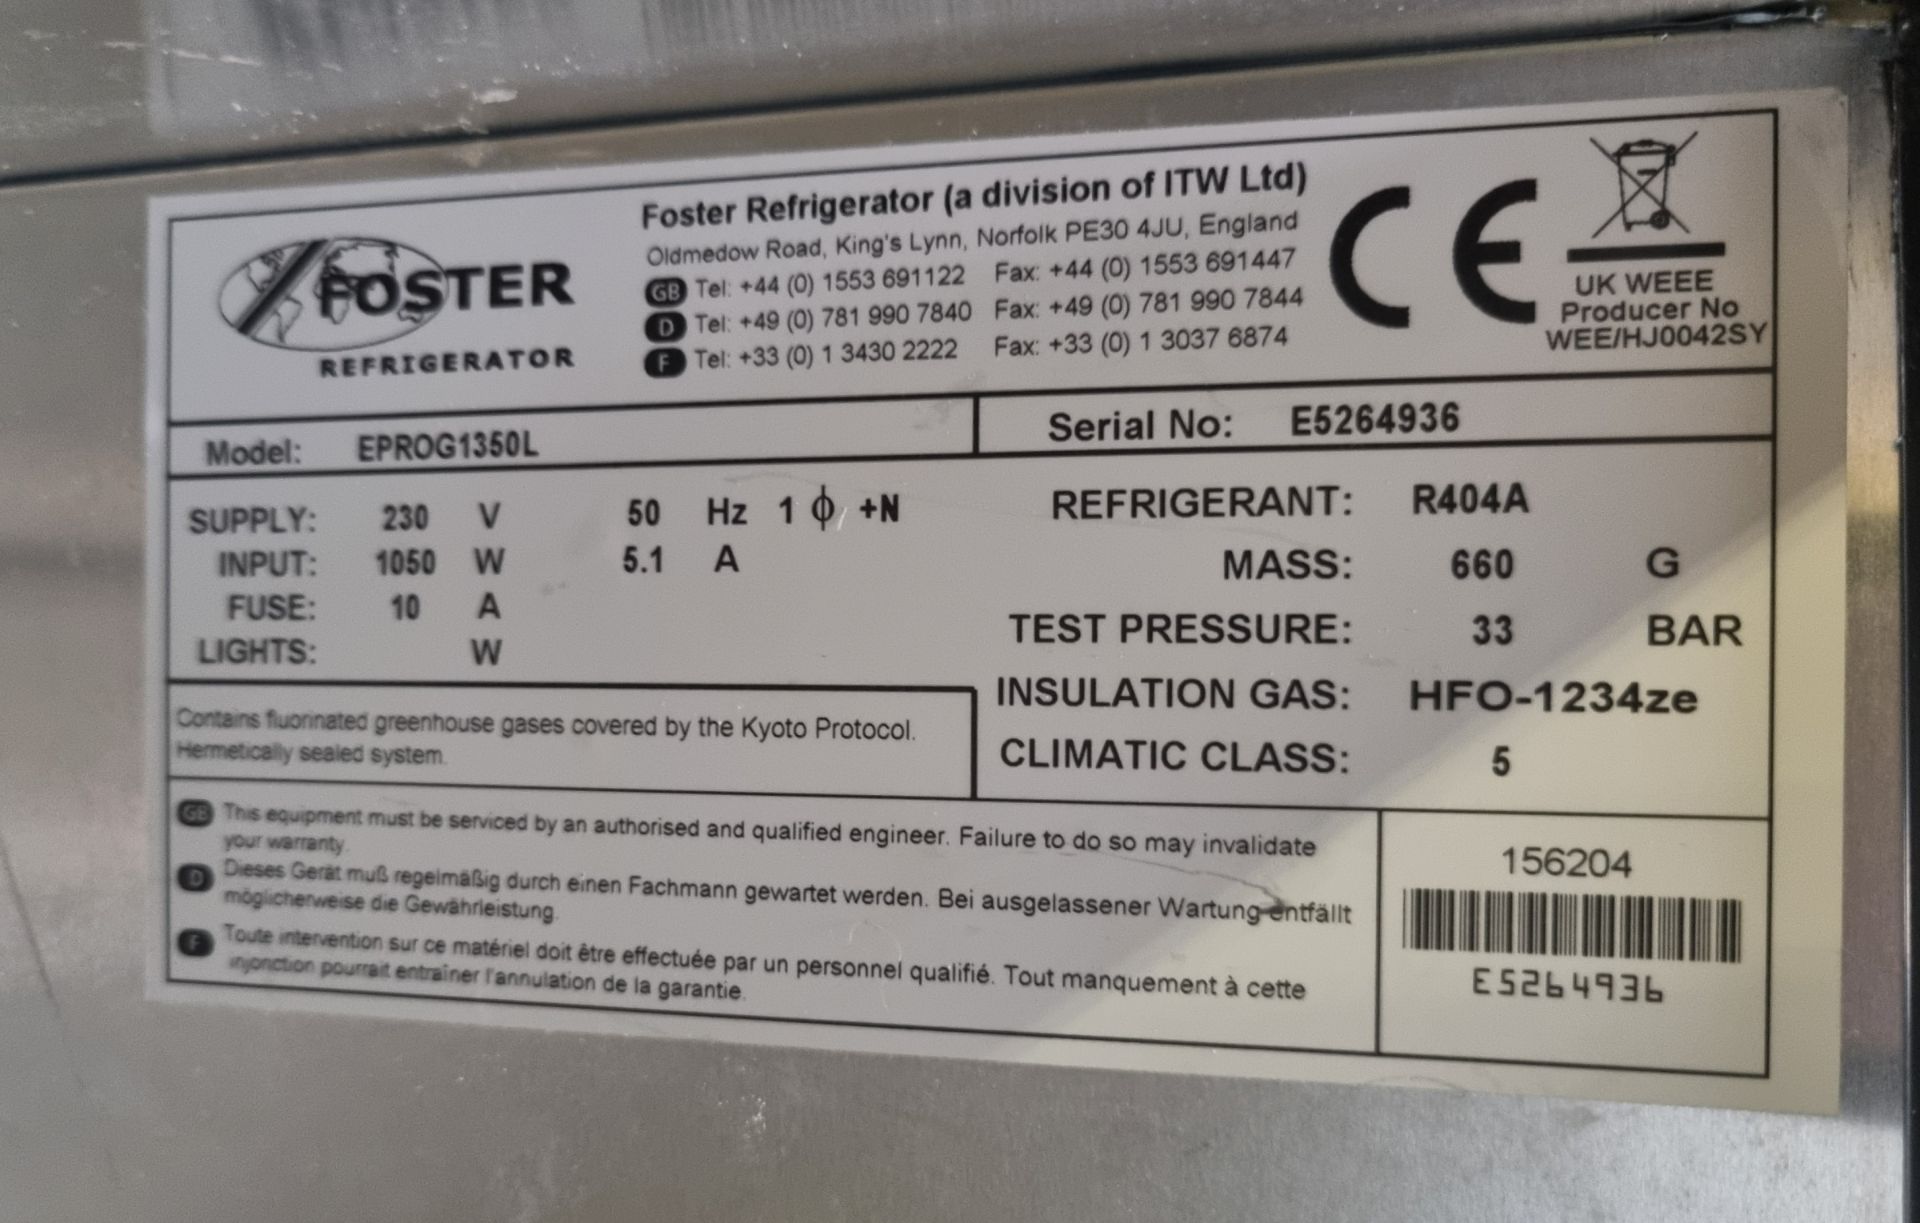 Foster EPROG1350L stainless steel double door upright freezer - W 1440 x D 810 x H 2060mm - Image 6 of 6